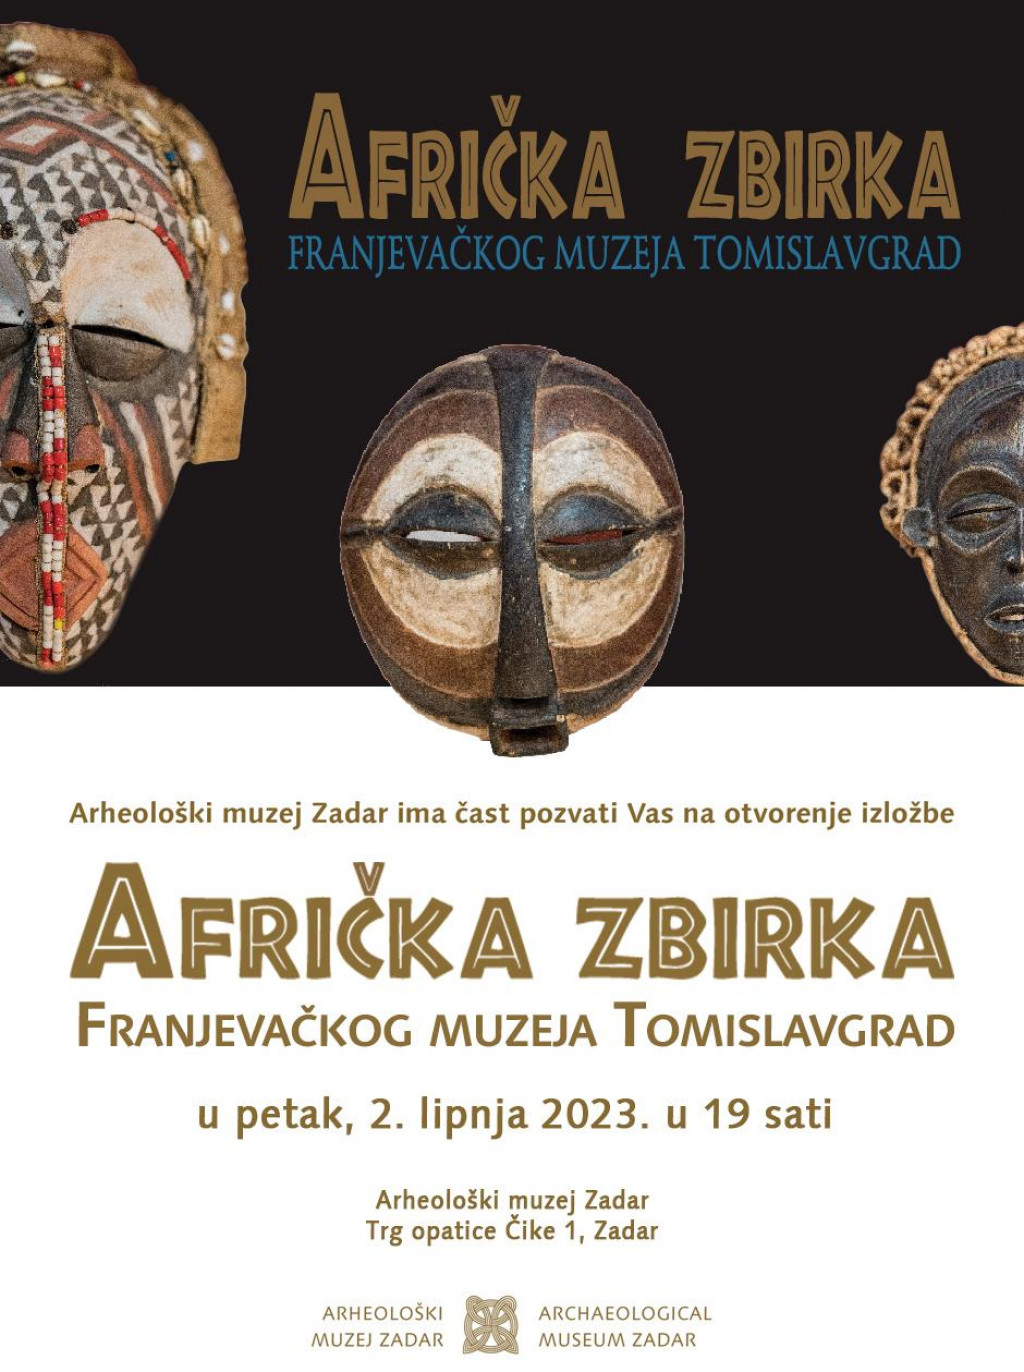 &lt;p&gt;Afrička zbirka Franjevačkog muzeja Tomislavgrad&lt;/p&gt;